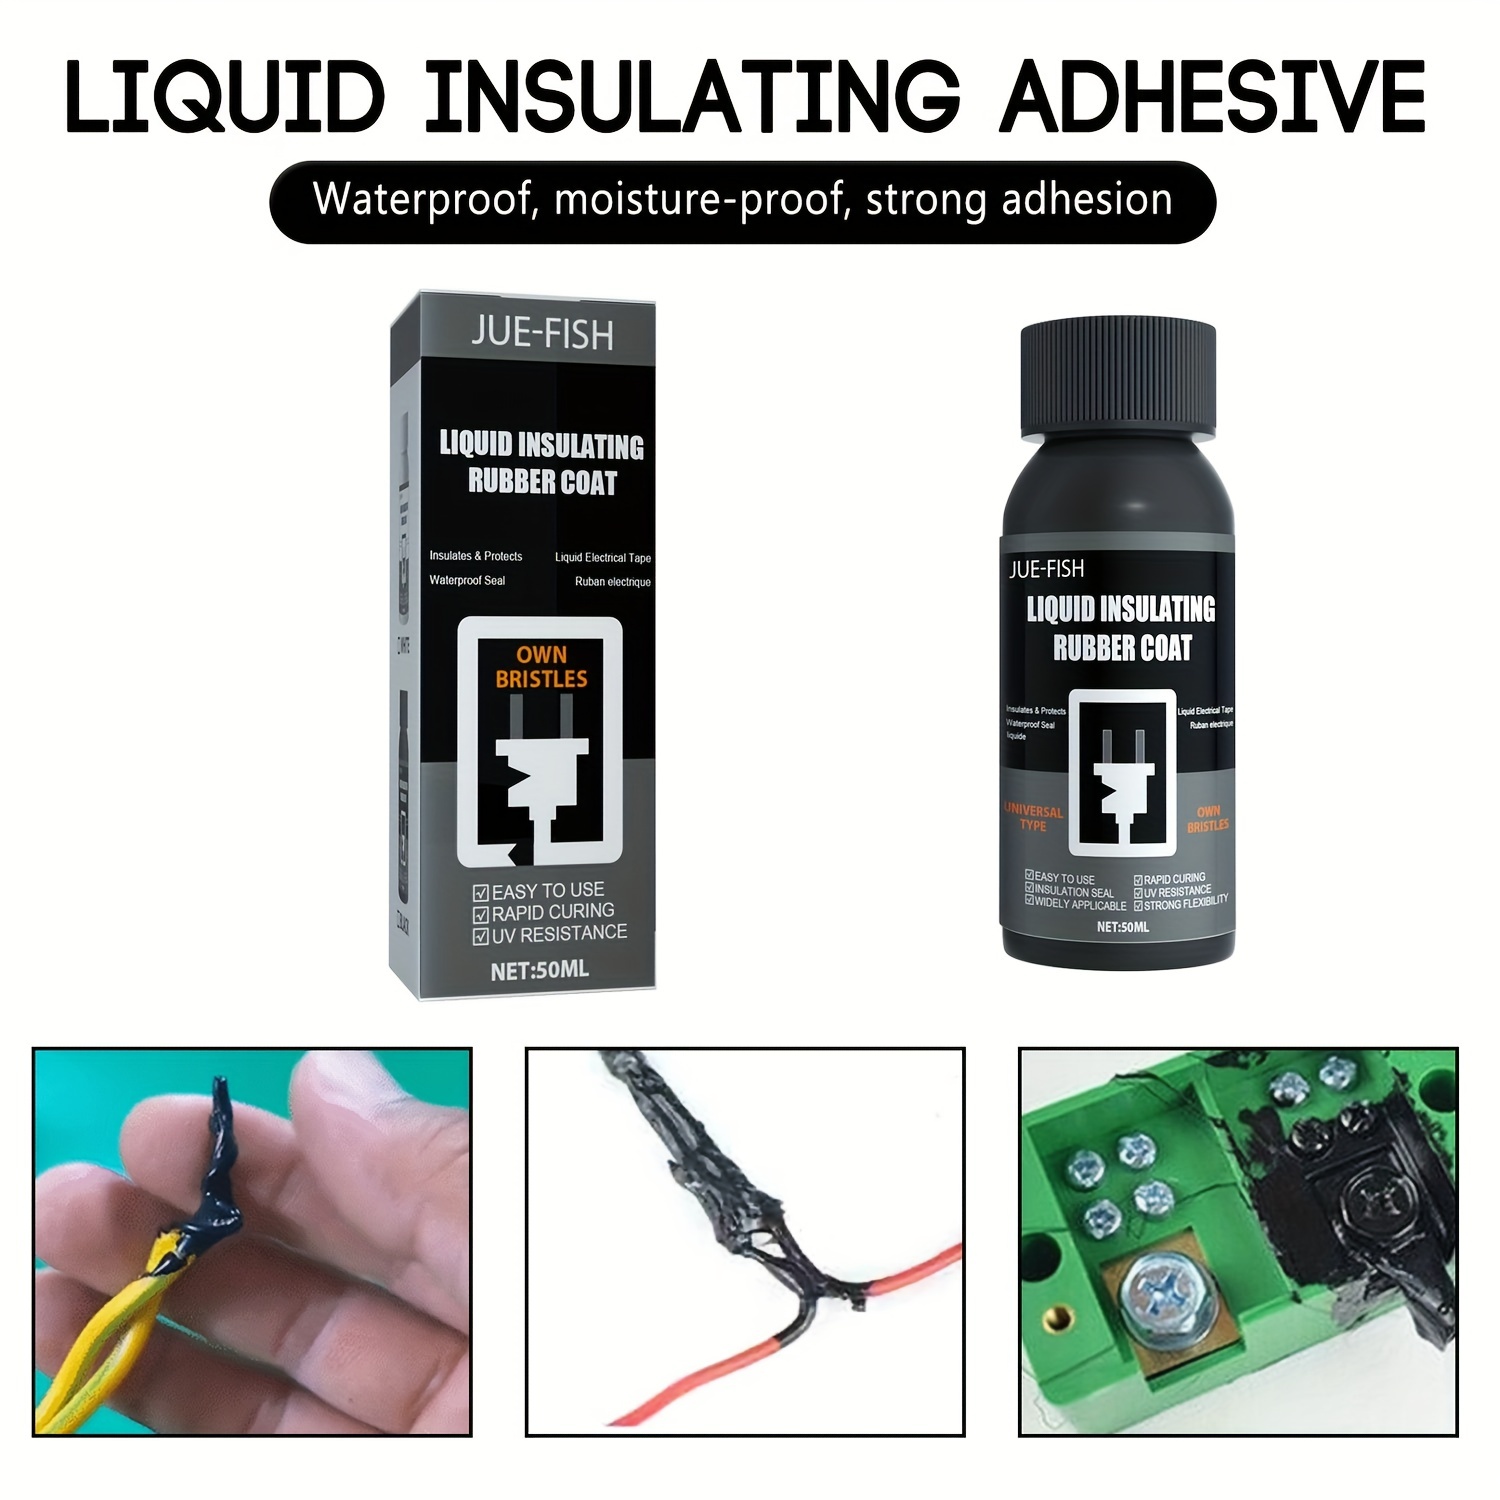 Circuit Board Liquid Electrical Tape Fast Dry Liquid Electrical